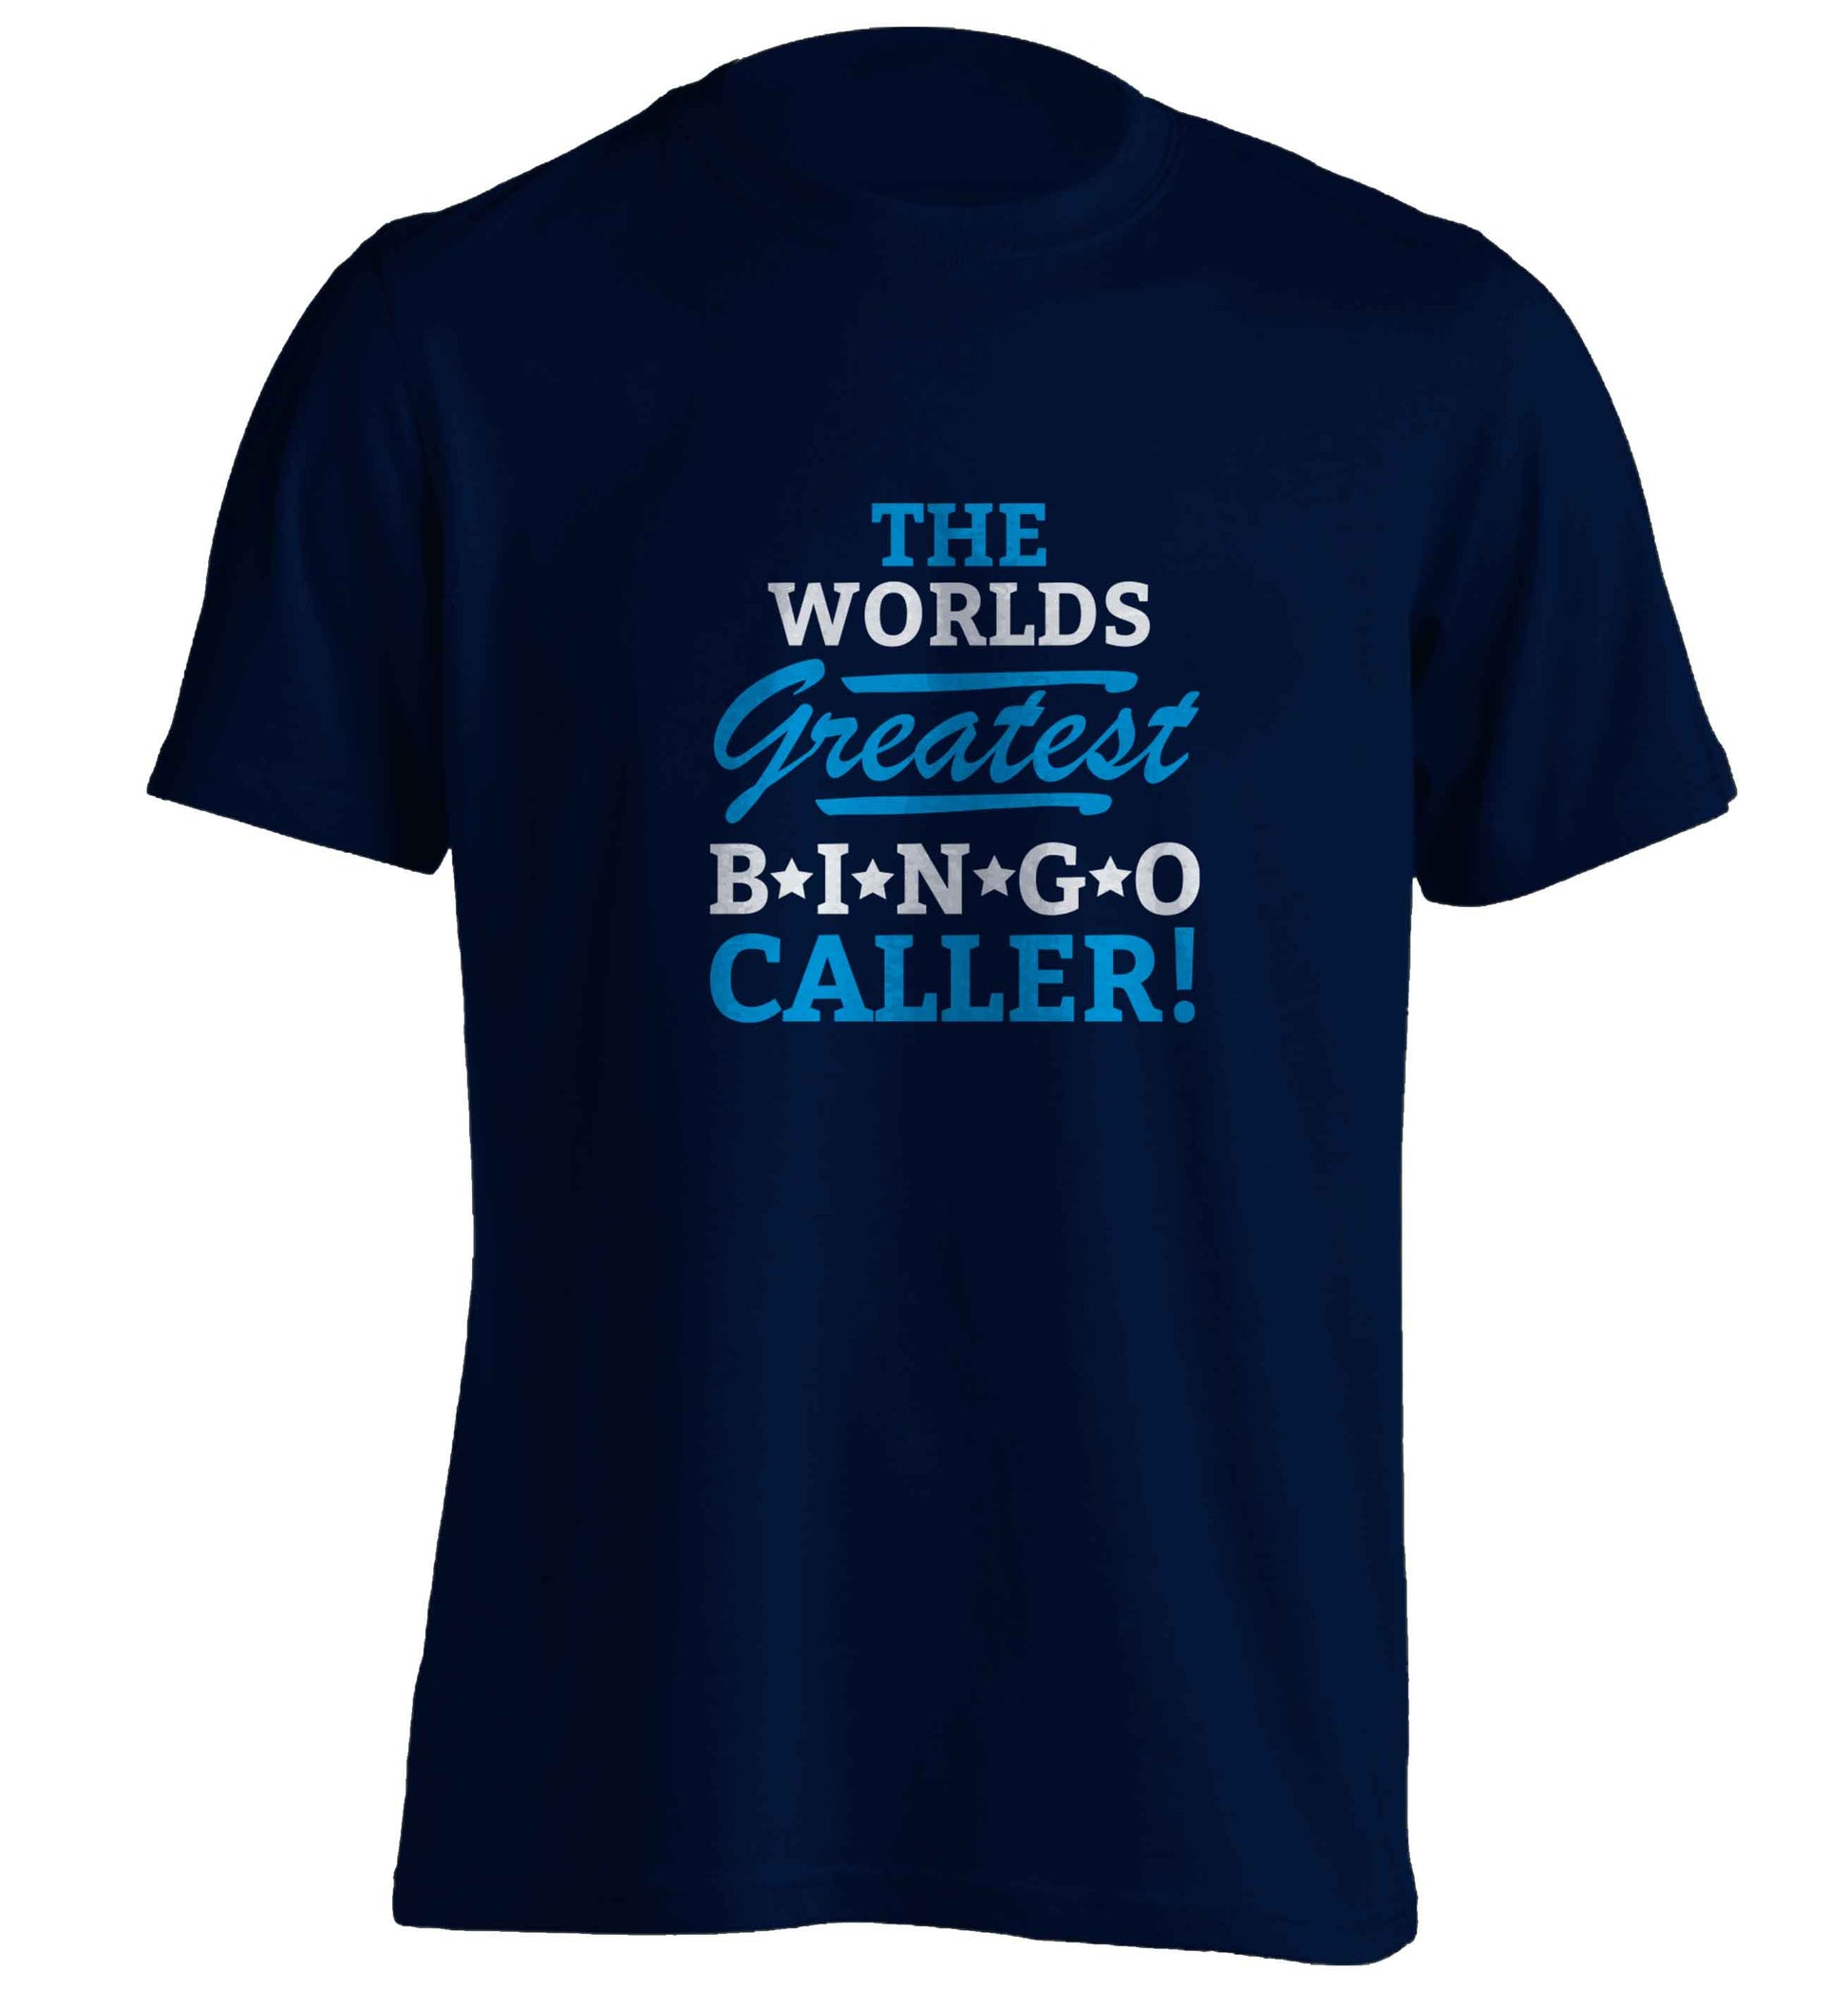 Worlds greatest bingo caller adults unisex navy Tshirt 2XL